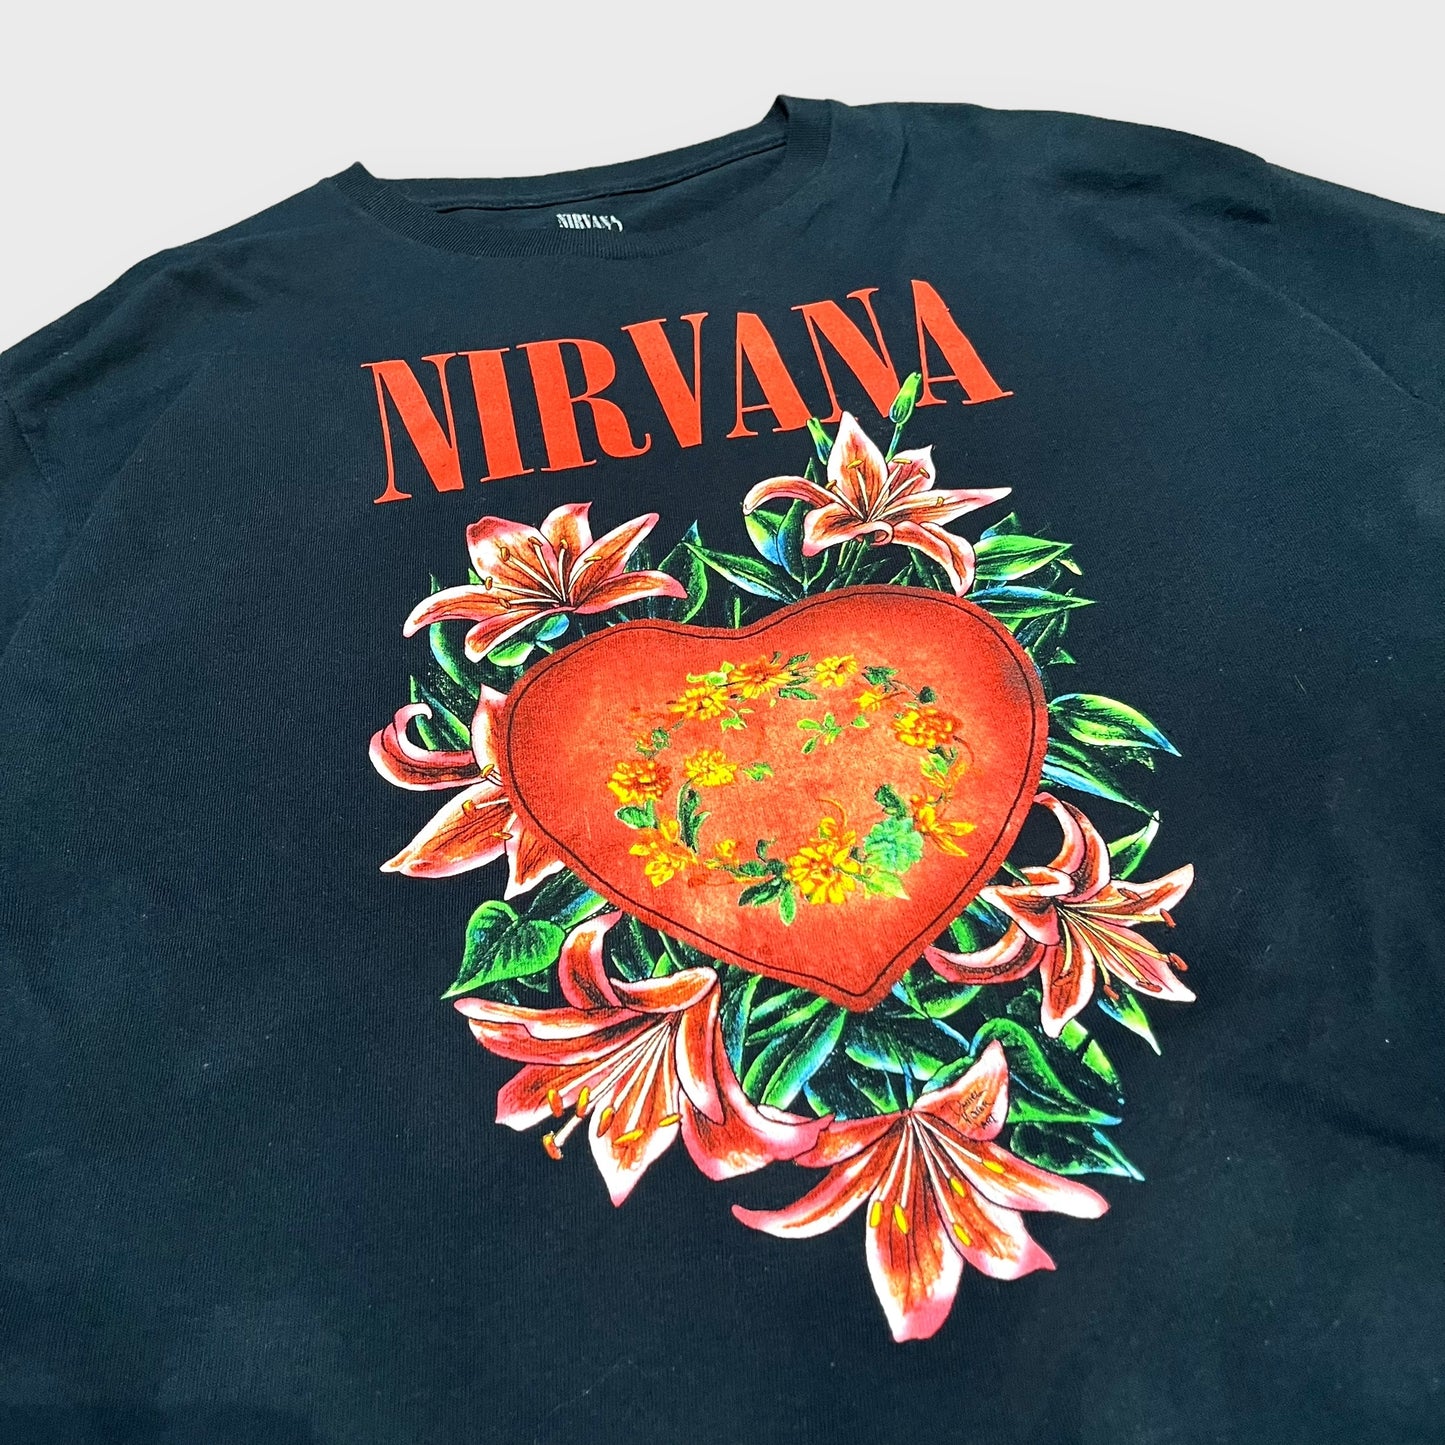 00’s NIRVANA band t-shirt